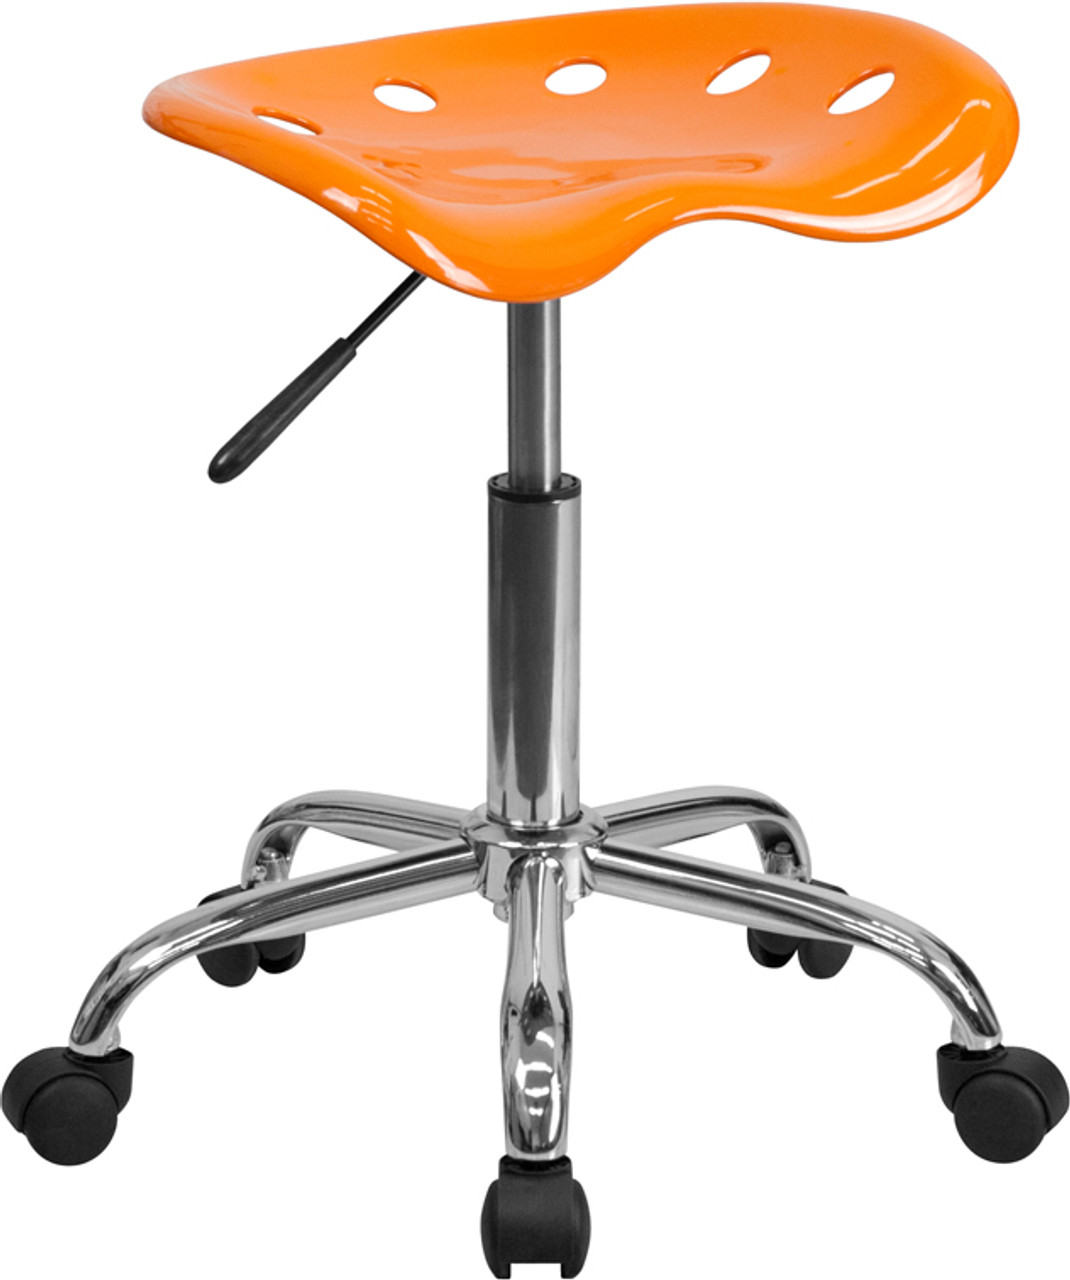 Vibrant Orange Tractor Seat and Chrome Stool , #FF-0501-14